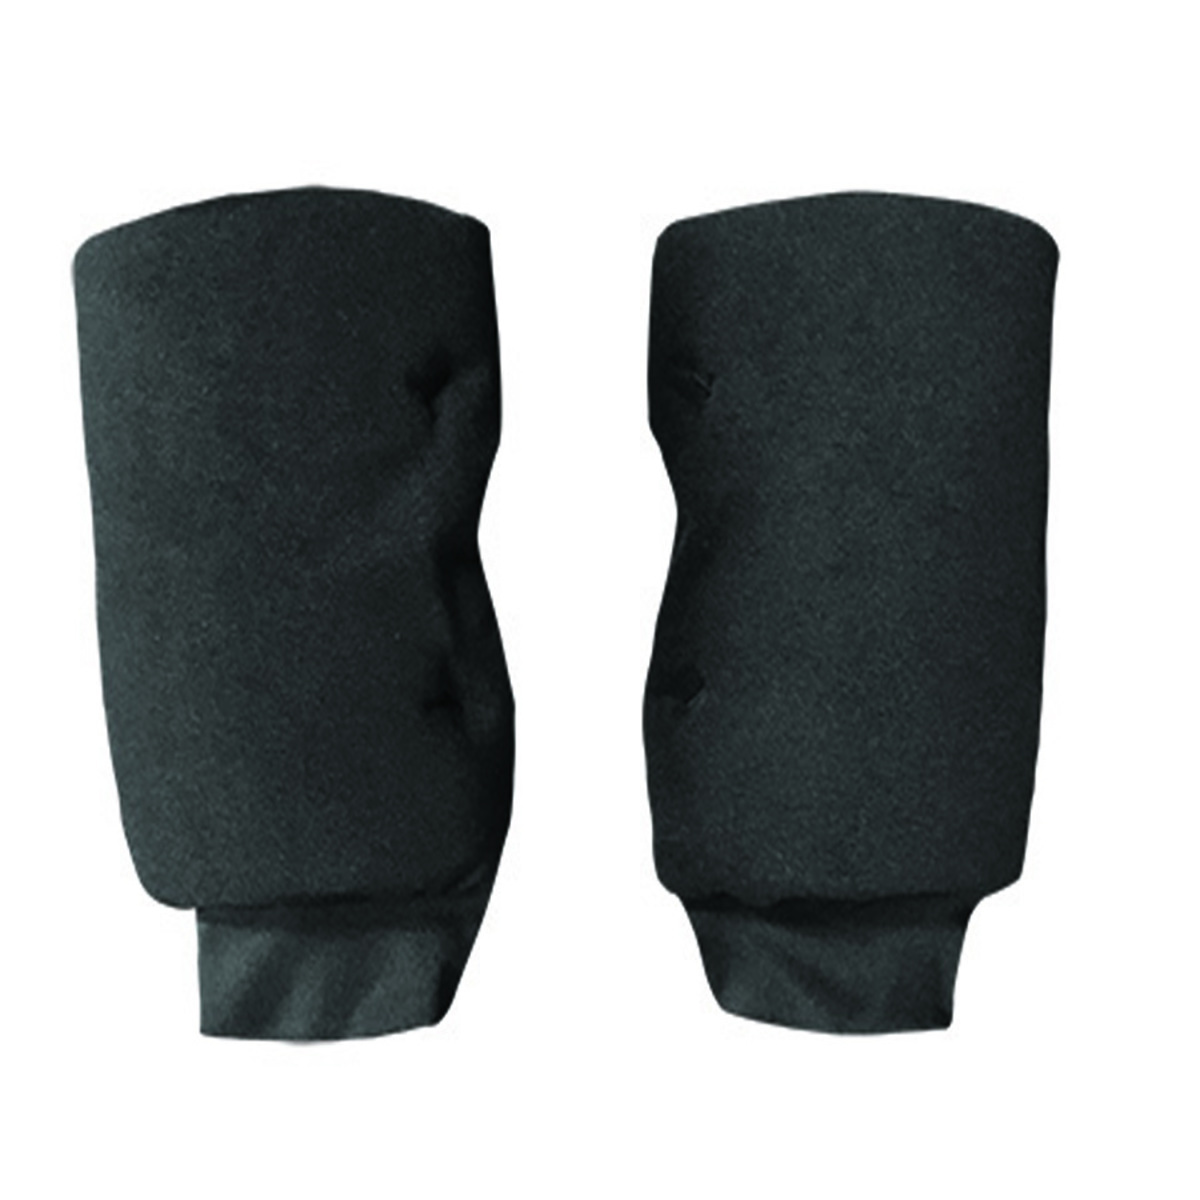 OccuNomix Medium Black OccuNomix Polyester/Foam Knee Pad